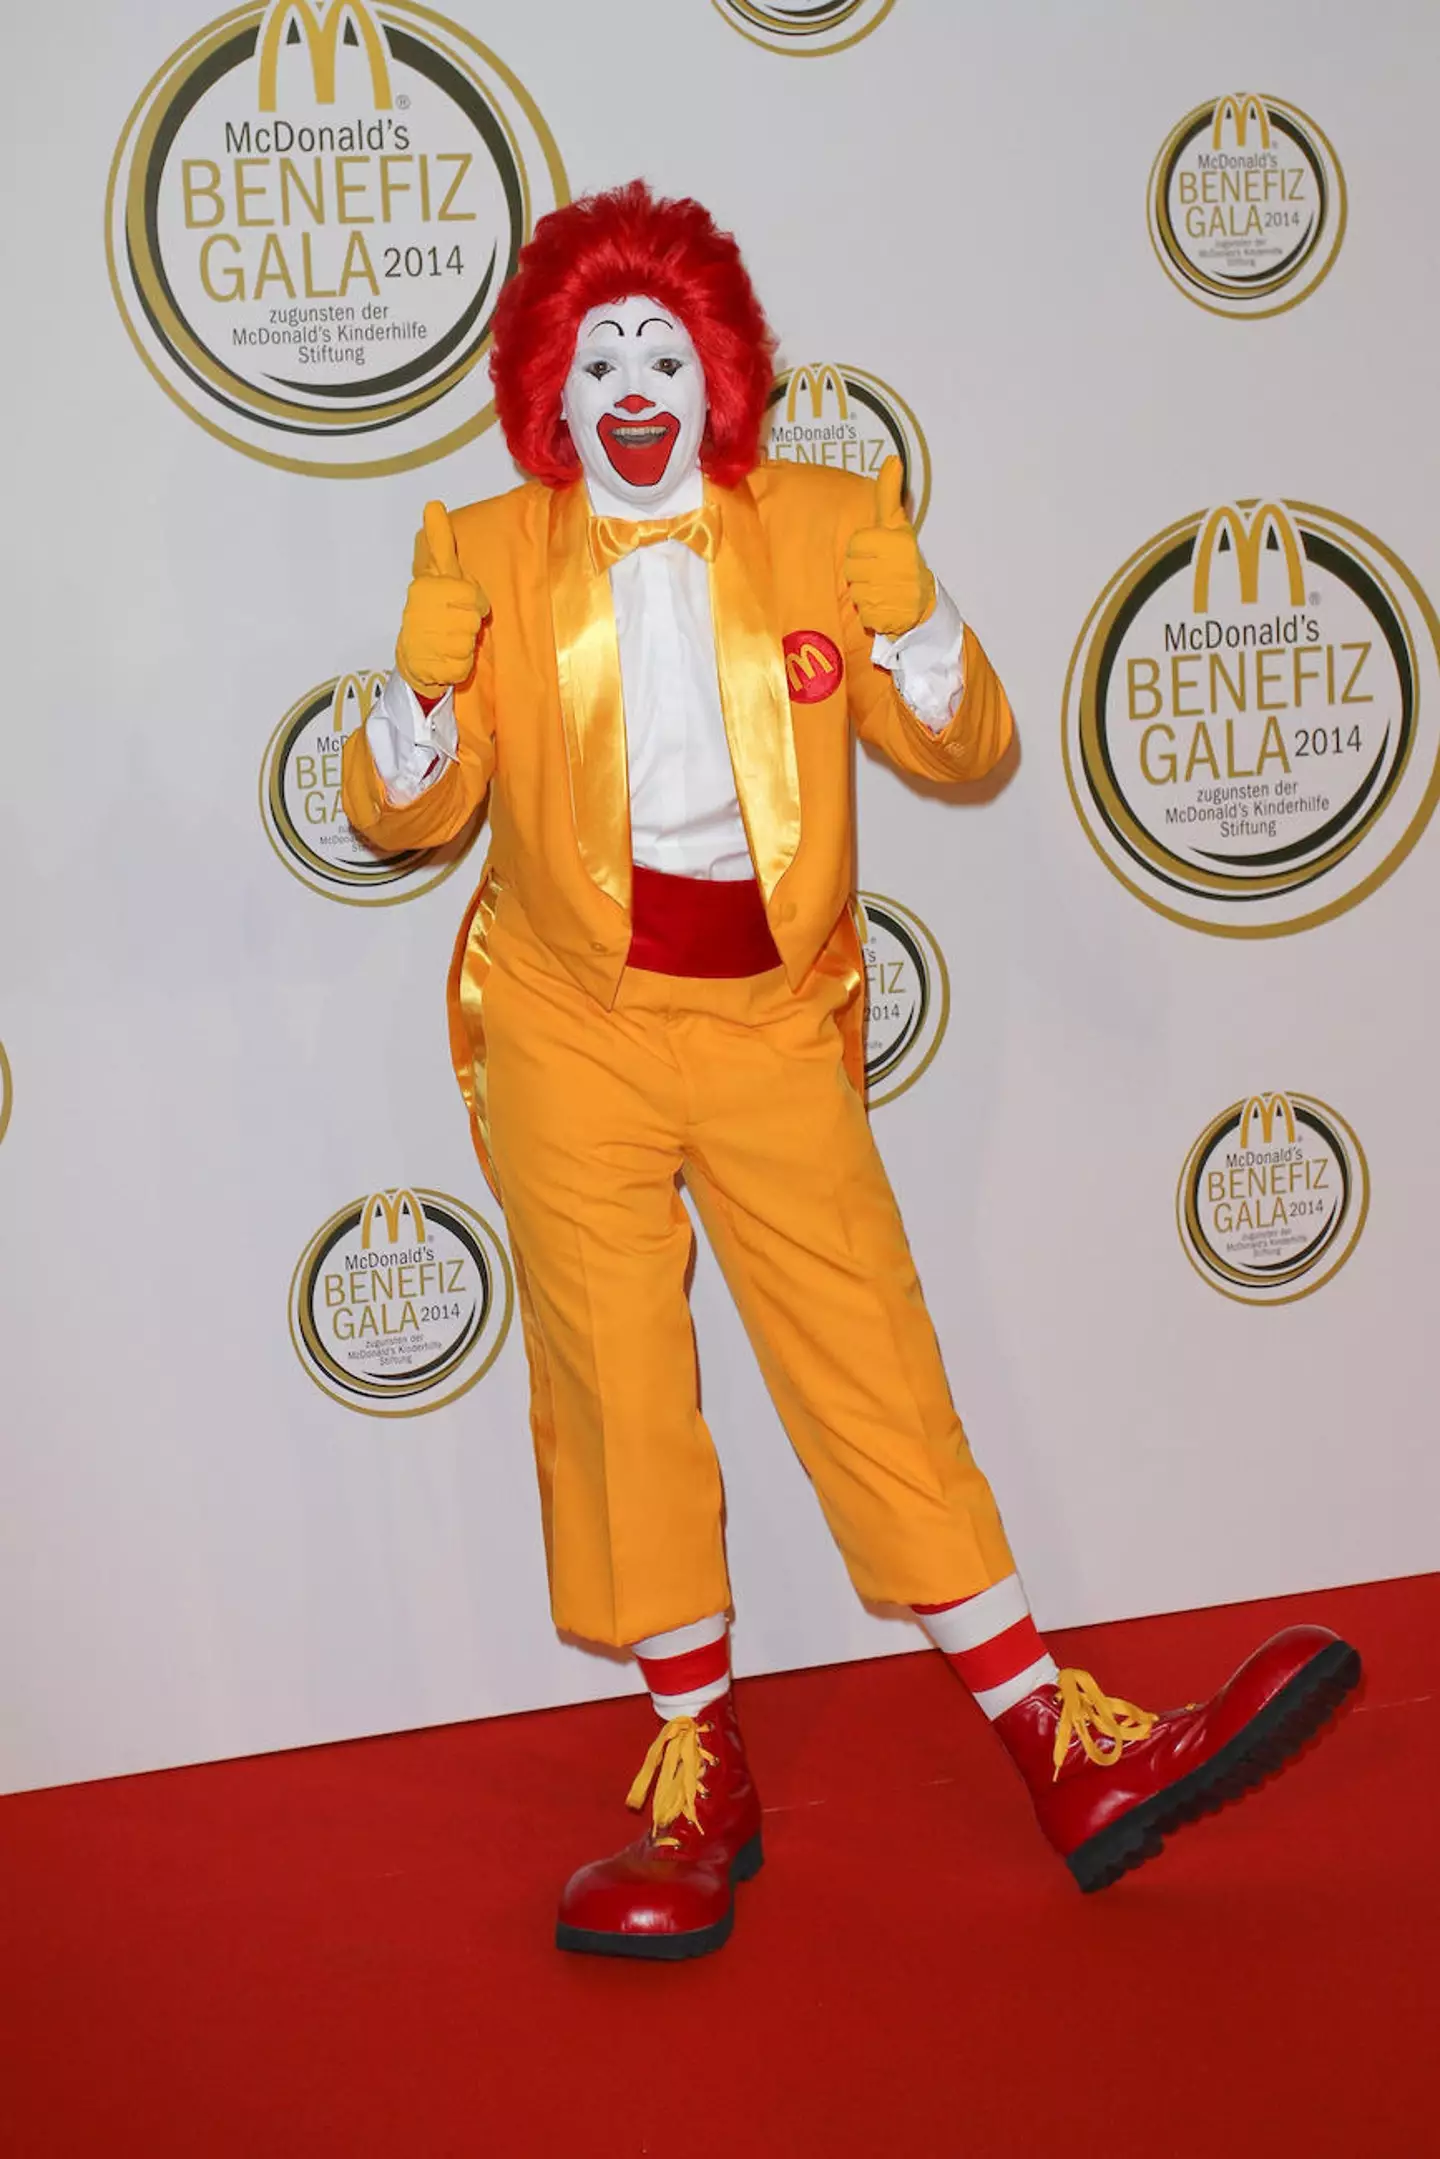 Ronald McDonald is hardly seen at McDonald's anymore.